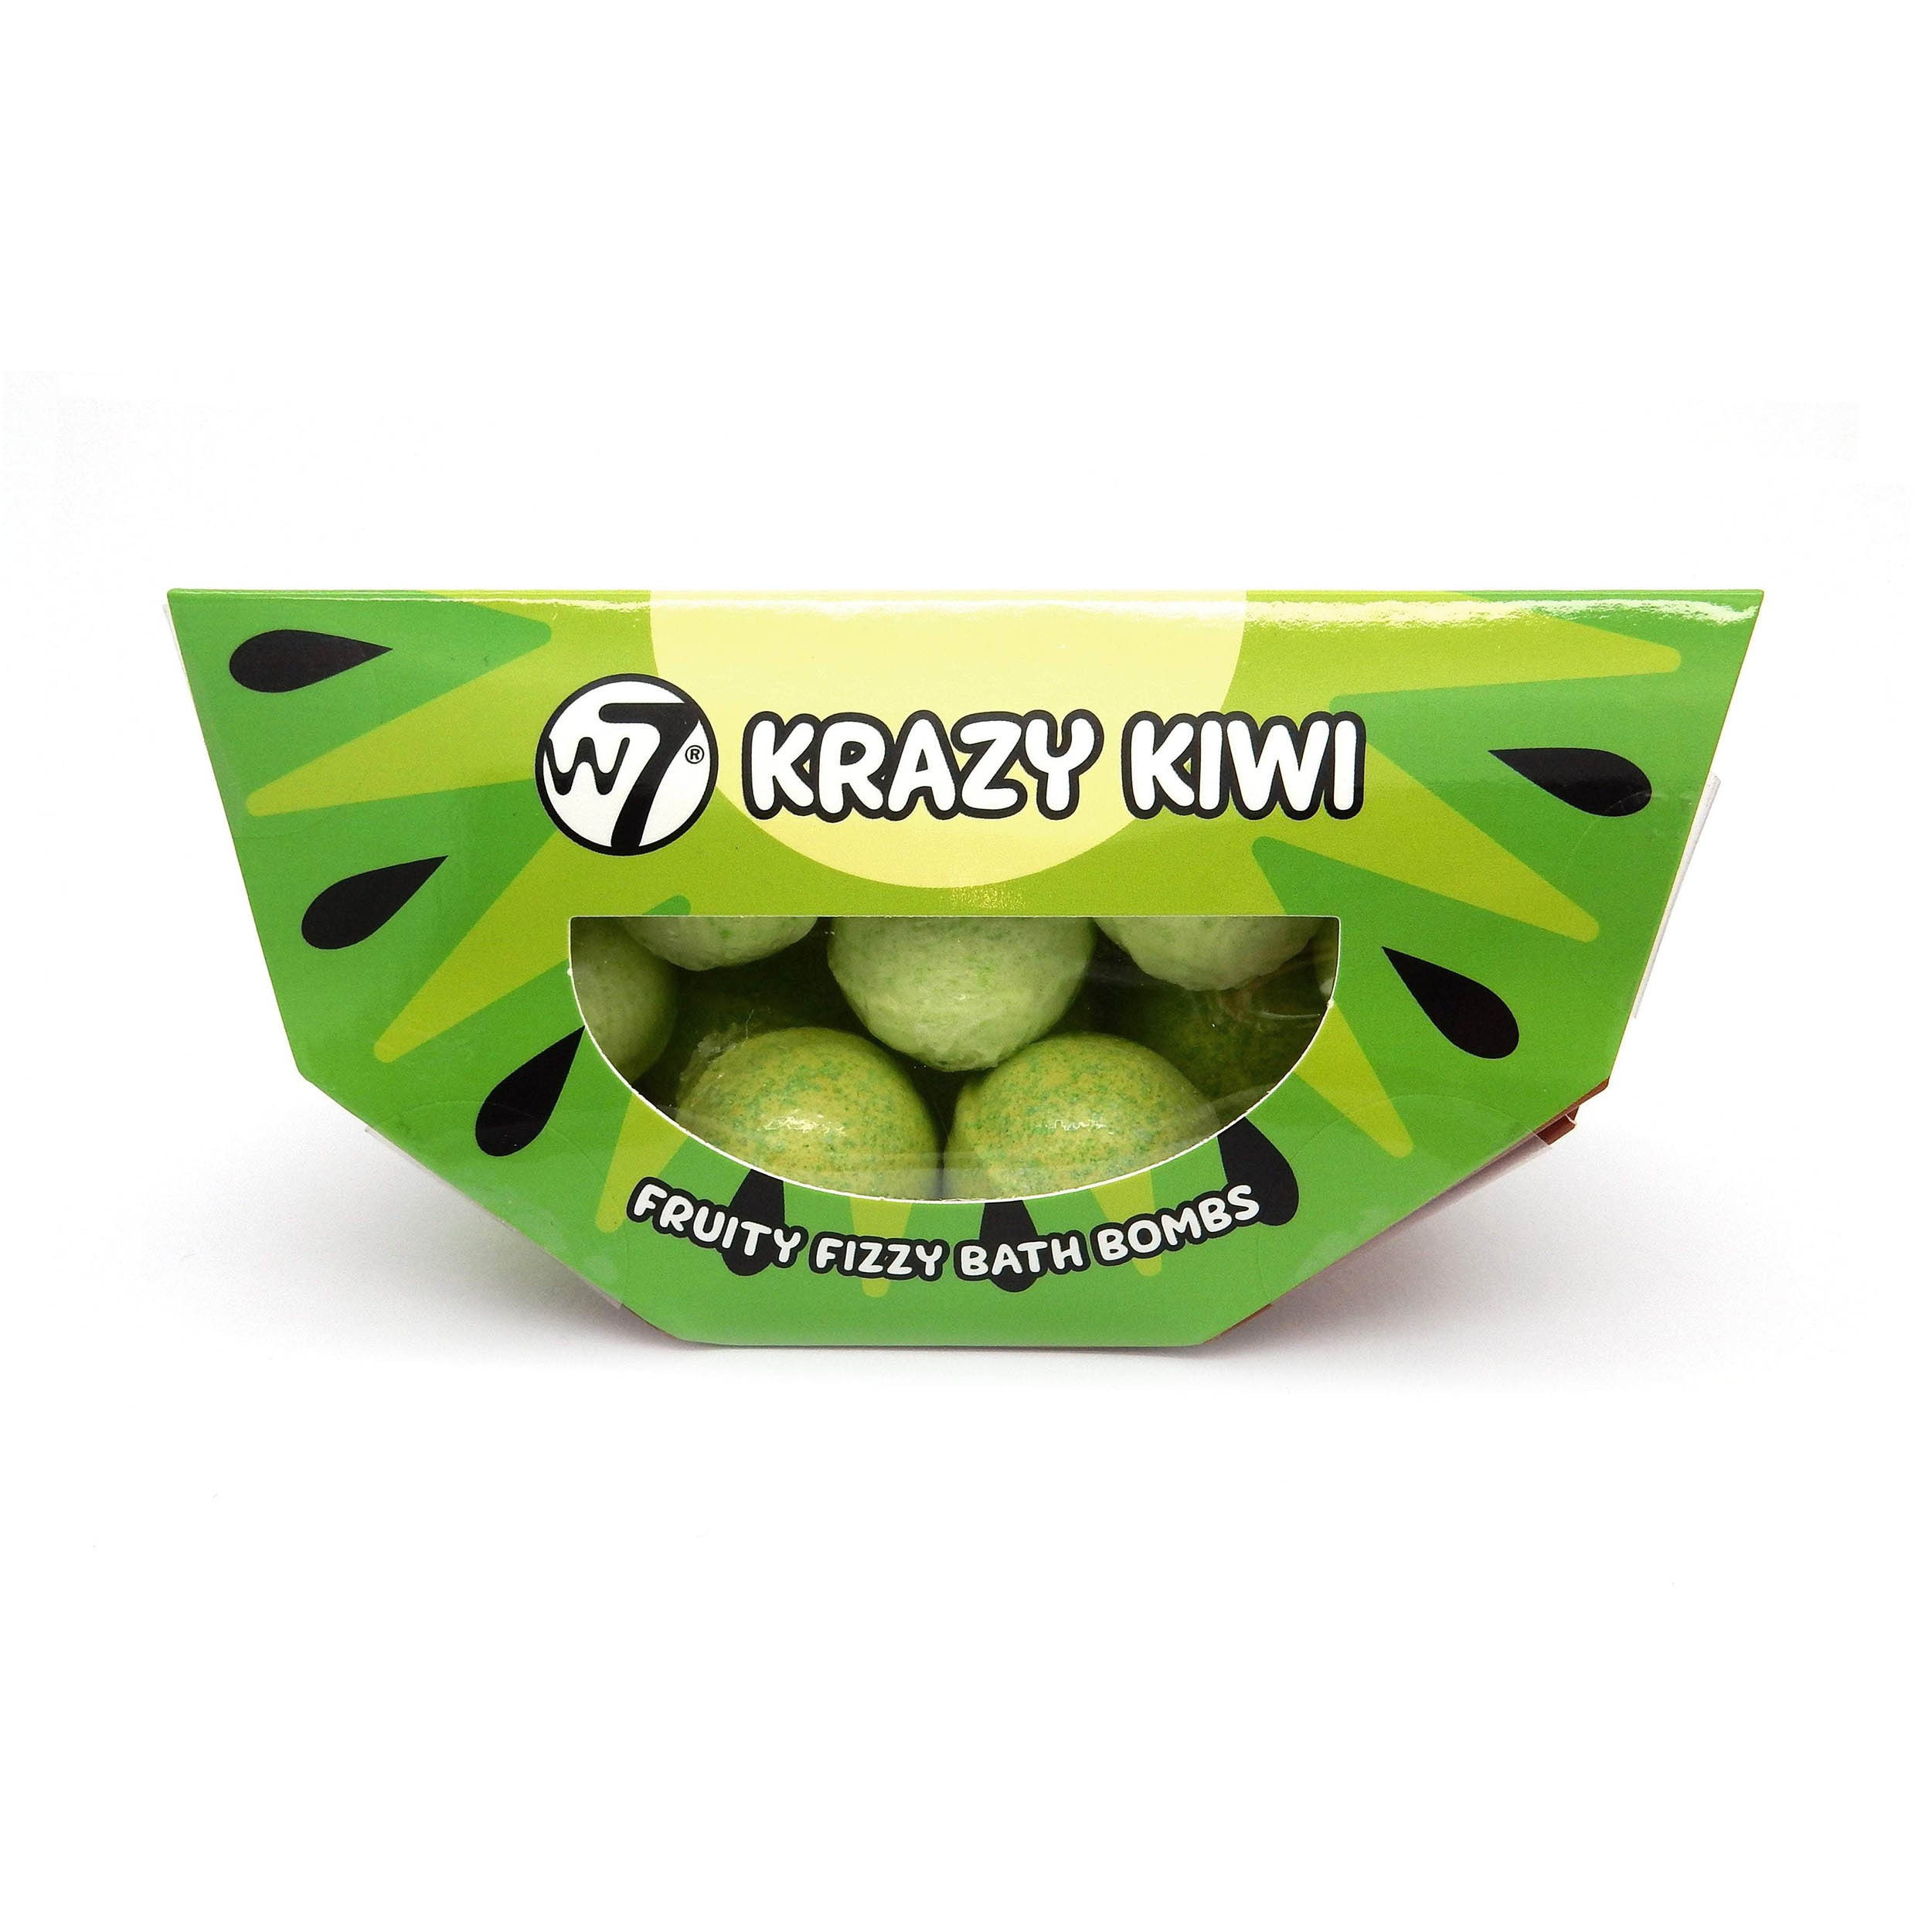 Badekugeln - Krazy Kiwi - Fruity Fizzy Bath Bombs (10 Stück)